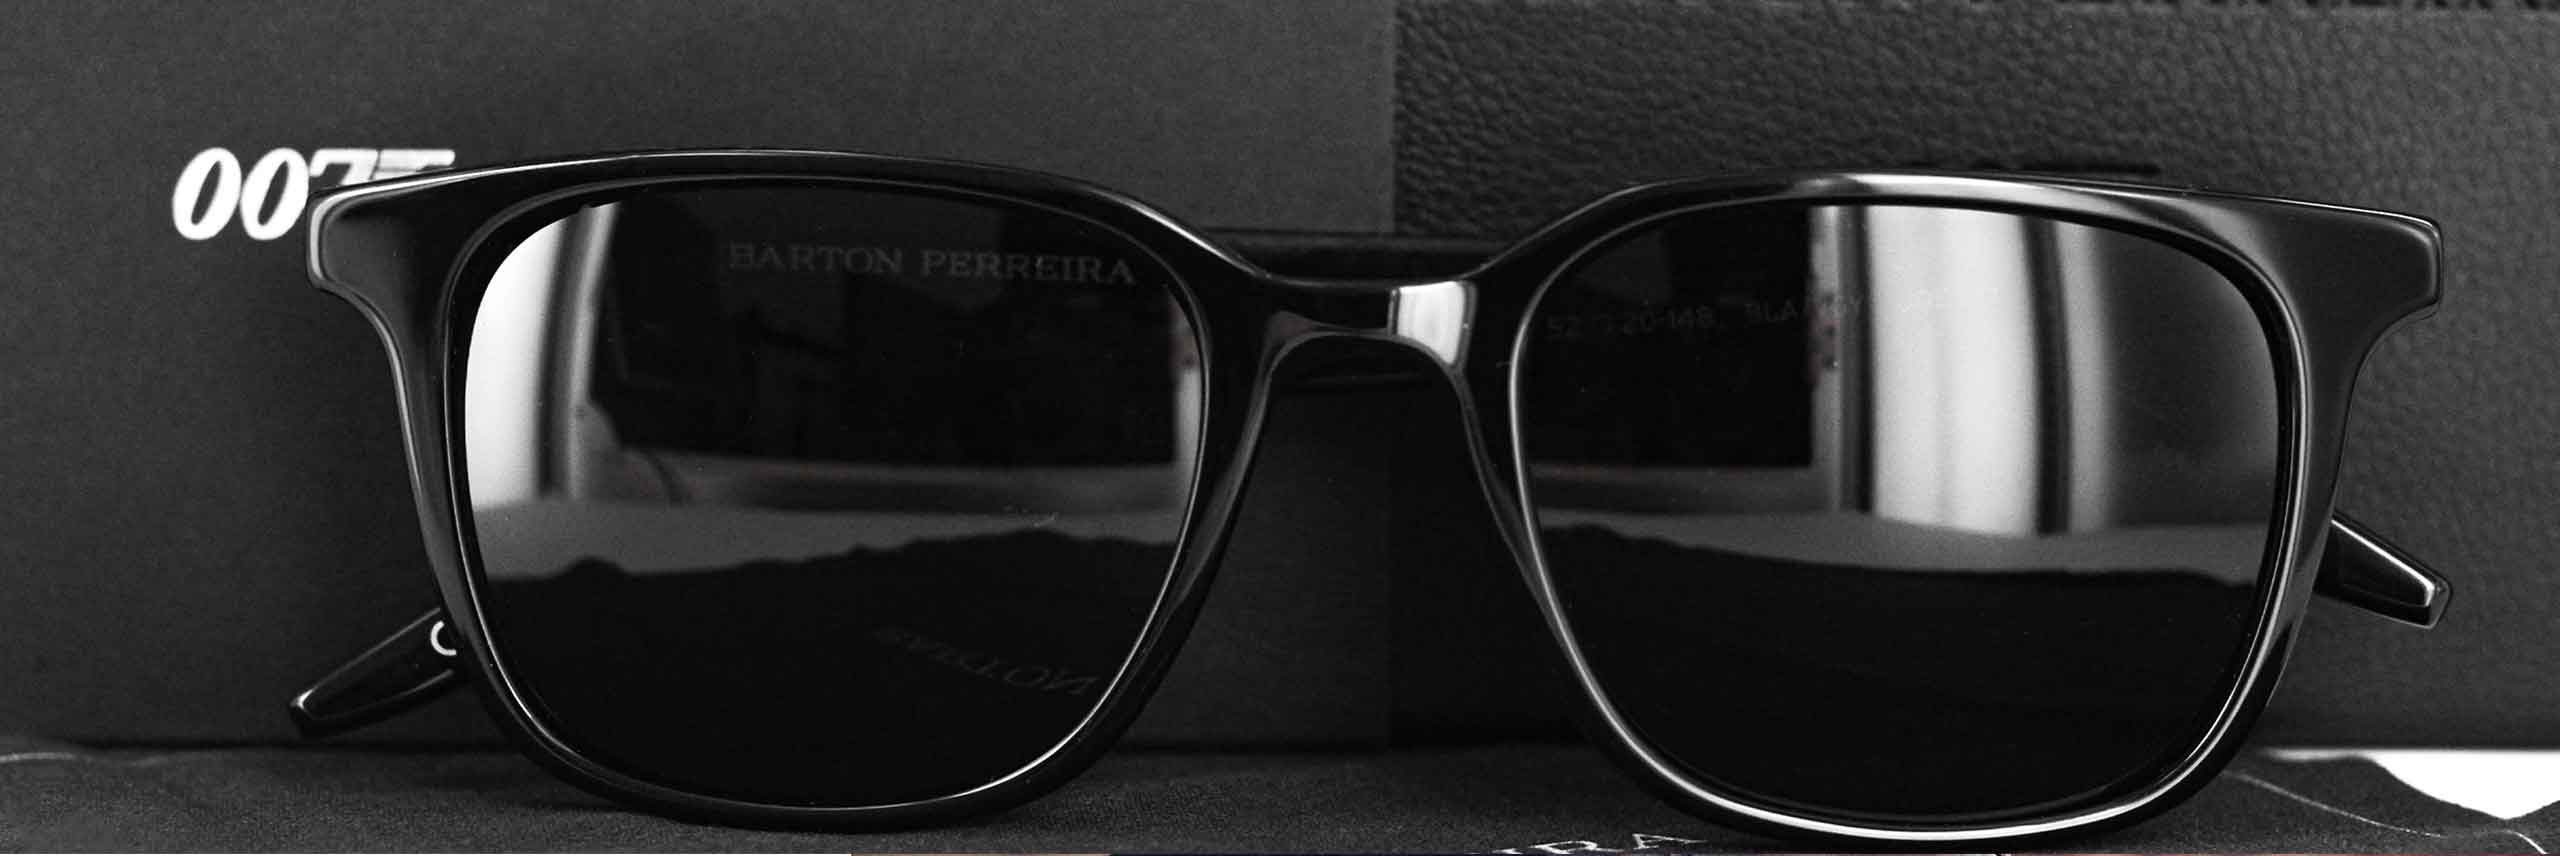 James Bond 007 Sunglasses Tom Fordandbarton Perreira Fashion Eyewear